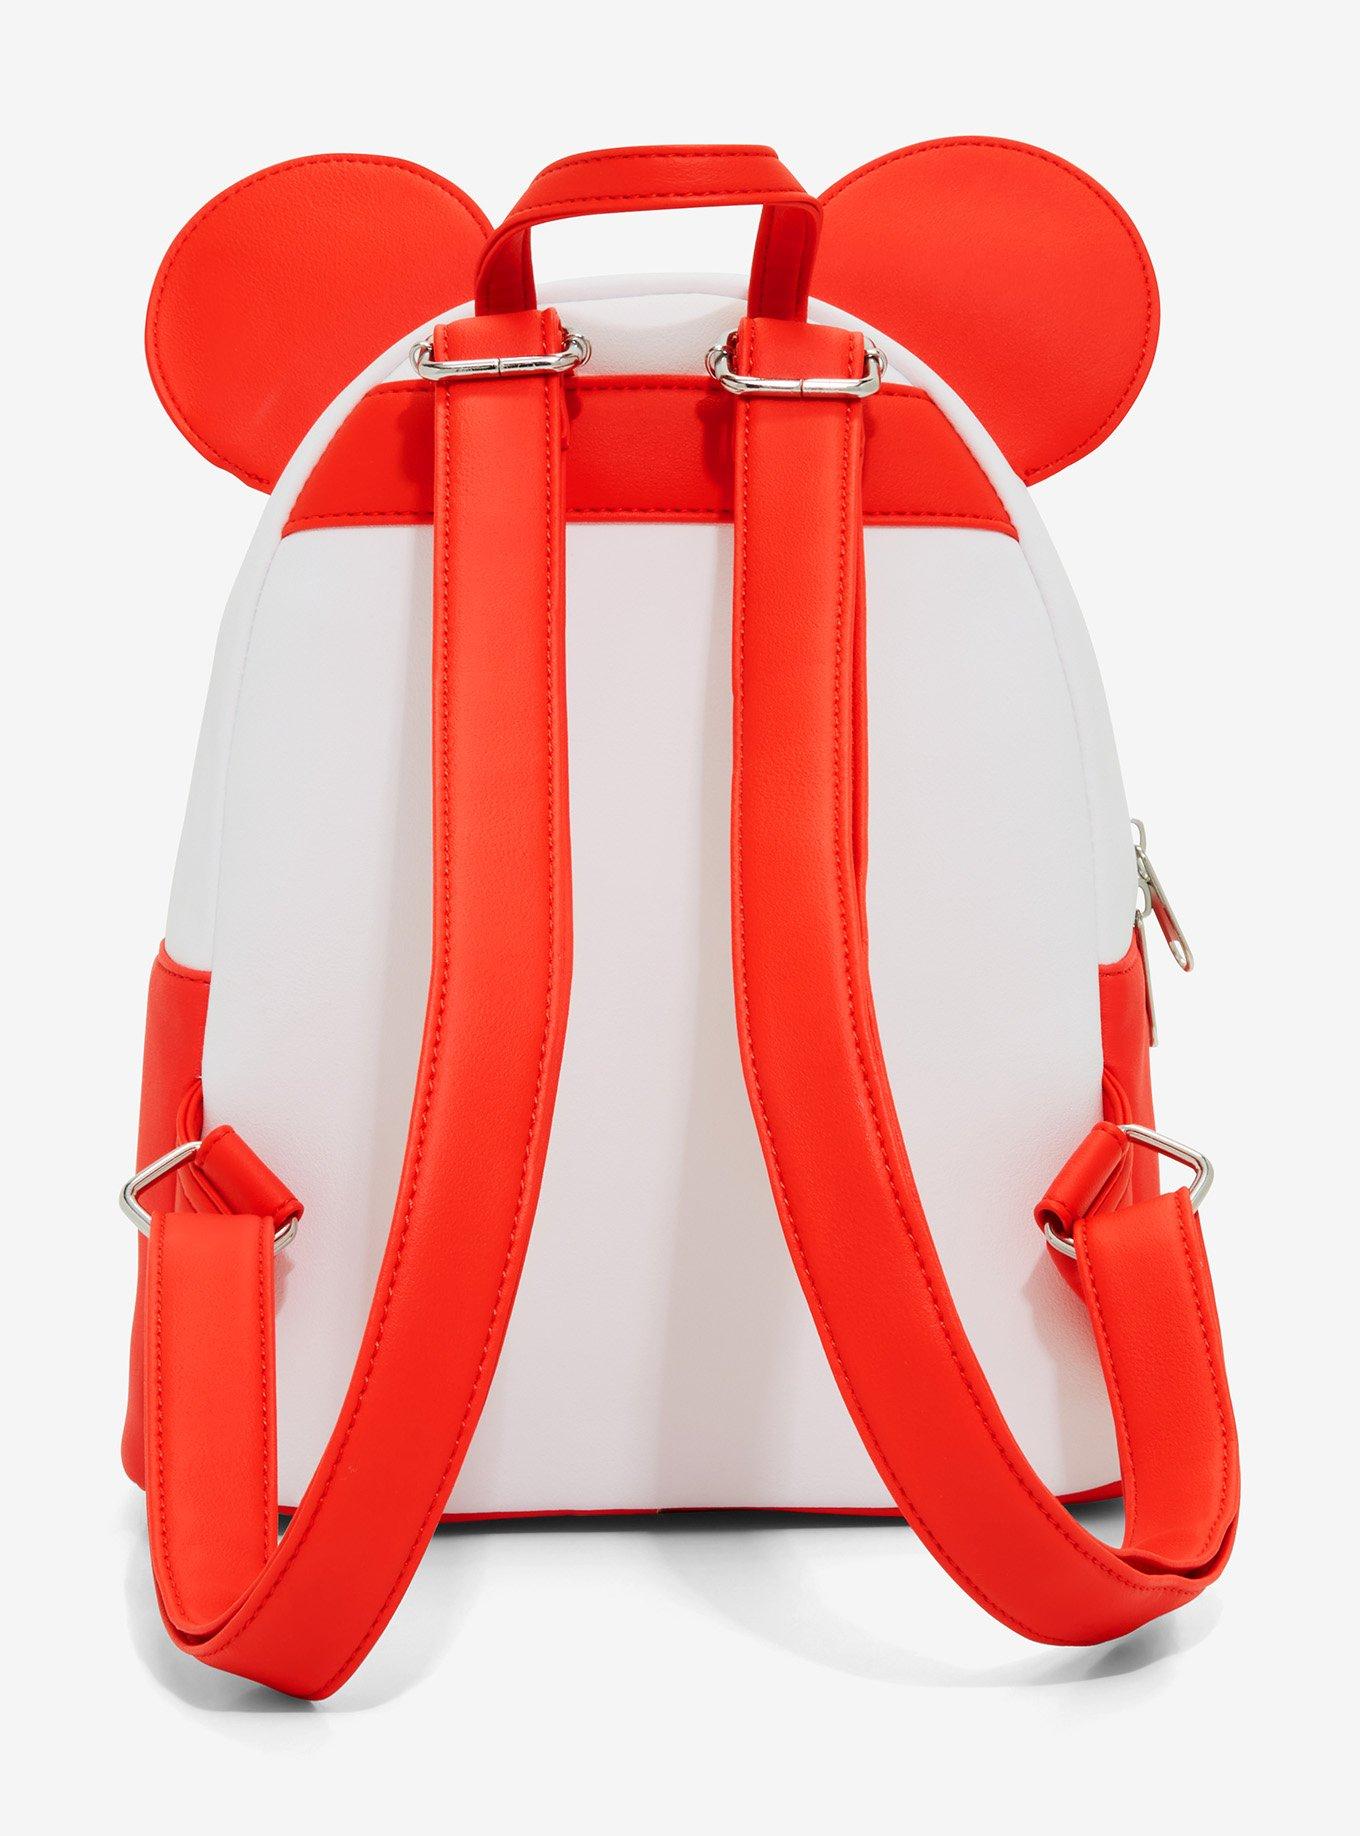 Loungefly Disney Minnie Mouse Mushroom Floral Mini Backpack